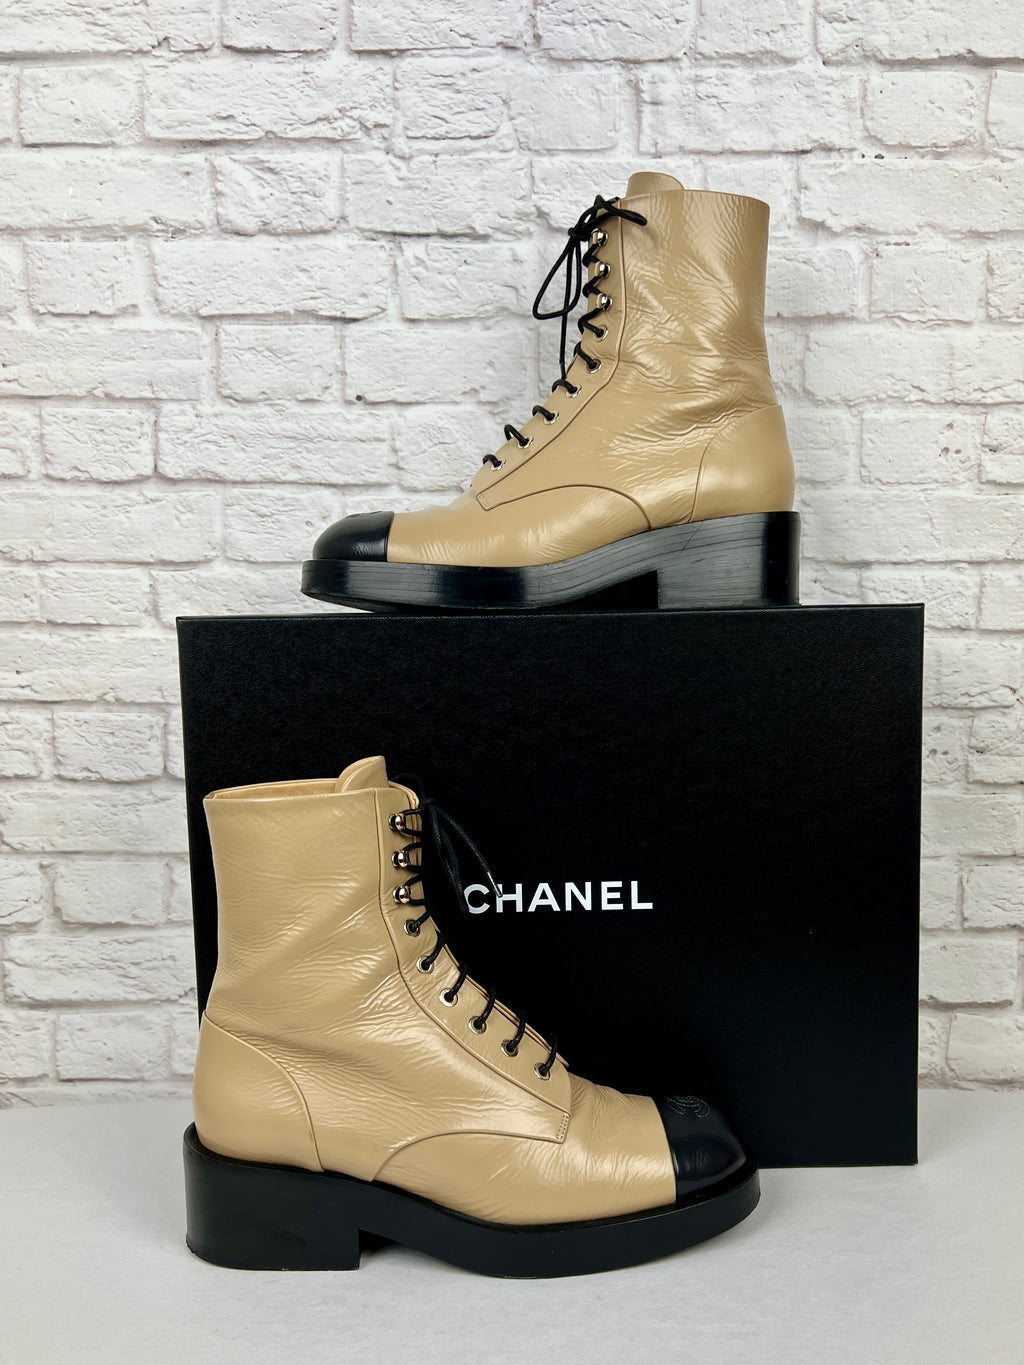 Chanel 22A Shiny Goatskin Combat Boots, Size 40 (US 9), Beige & Dark Gray (looks Black)